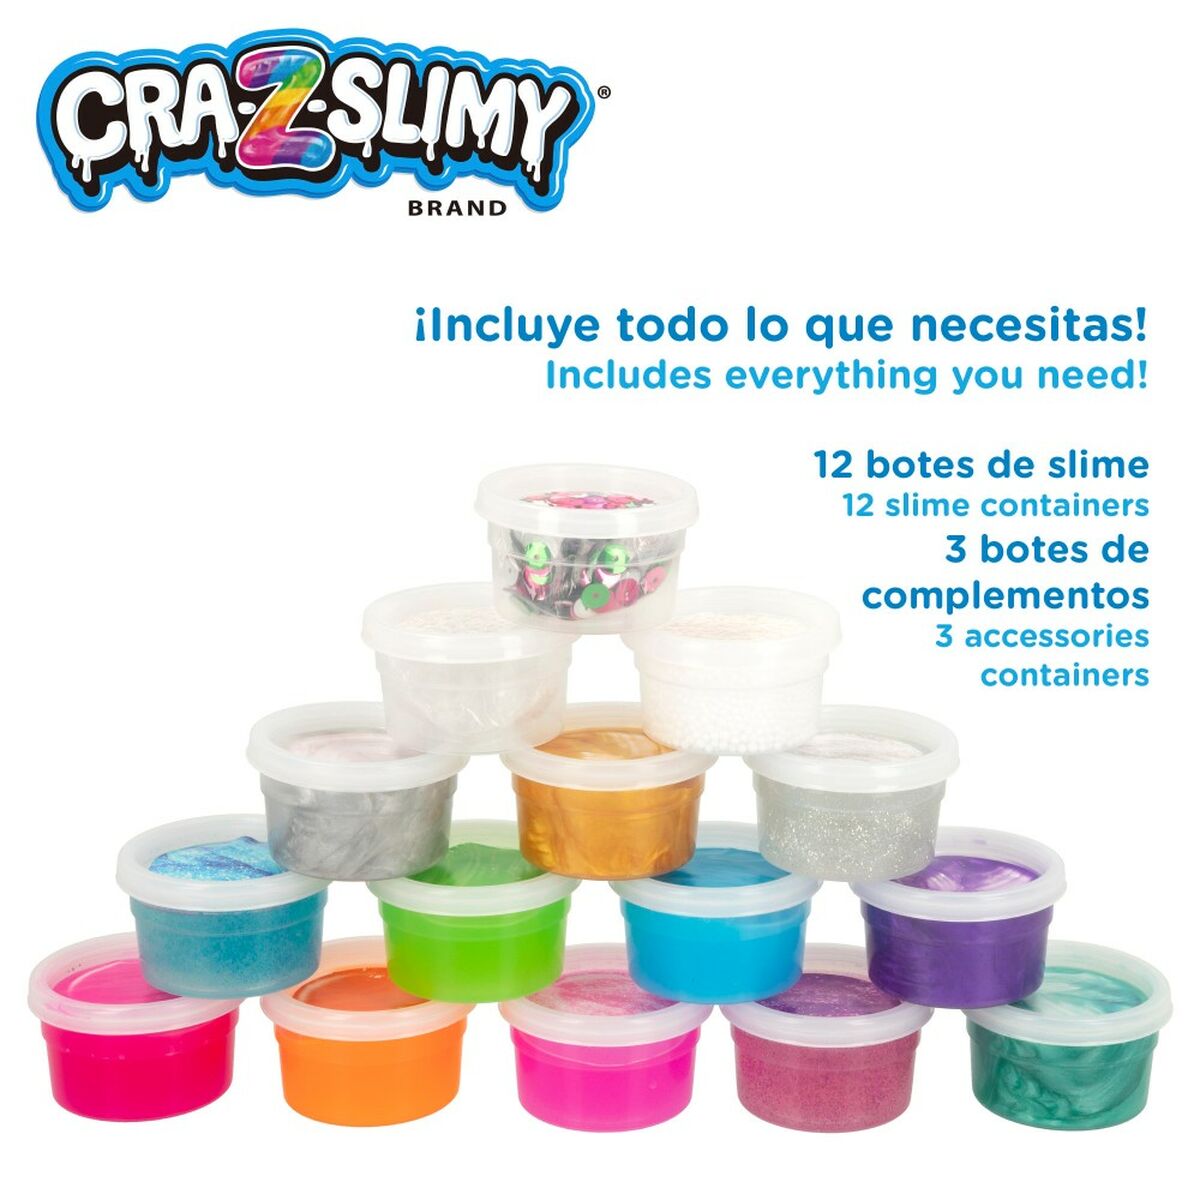 Modellera Spel Cra-Z-Art Slimy Blendz (4 antal) Slime-Leksaker och spel, Kreativa aktiviteter-Cra-Z-Art-peaceofhome.se